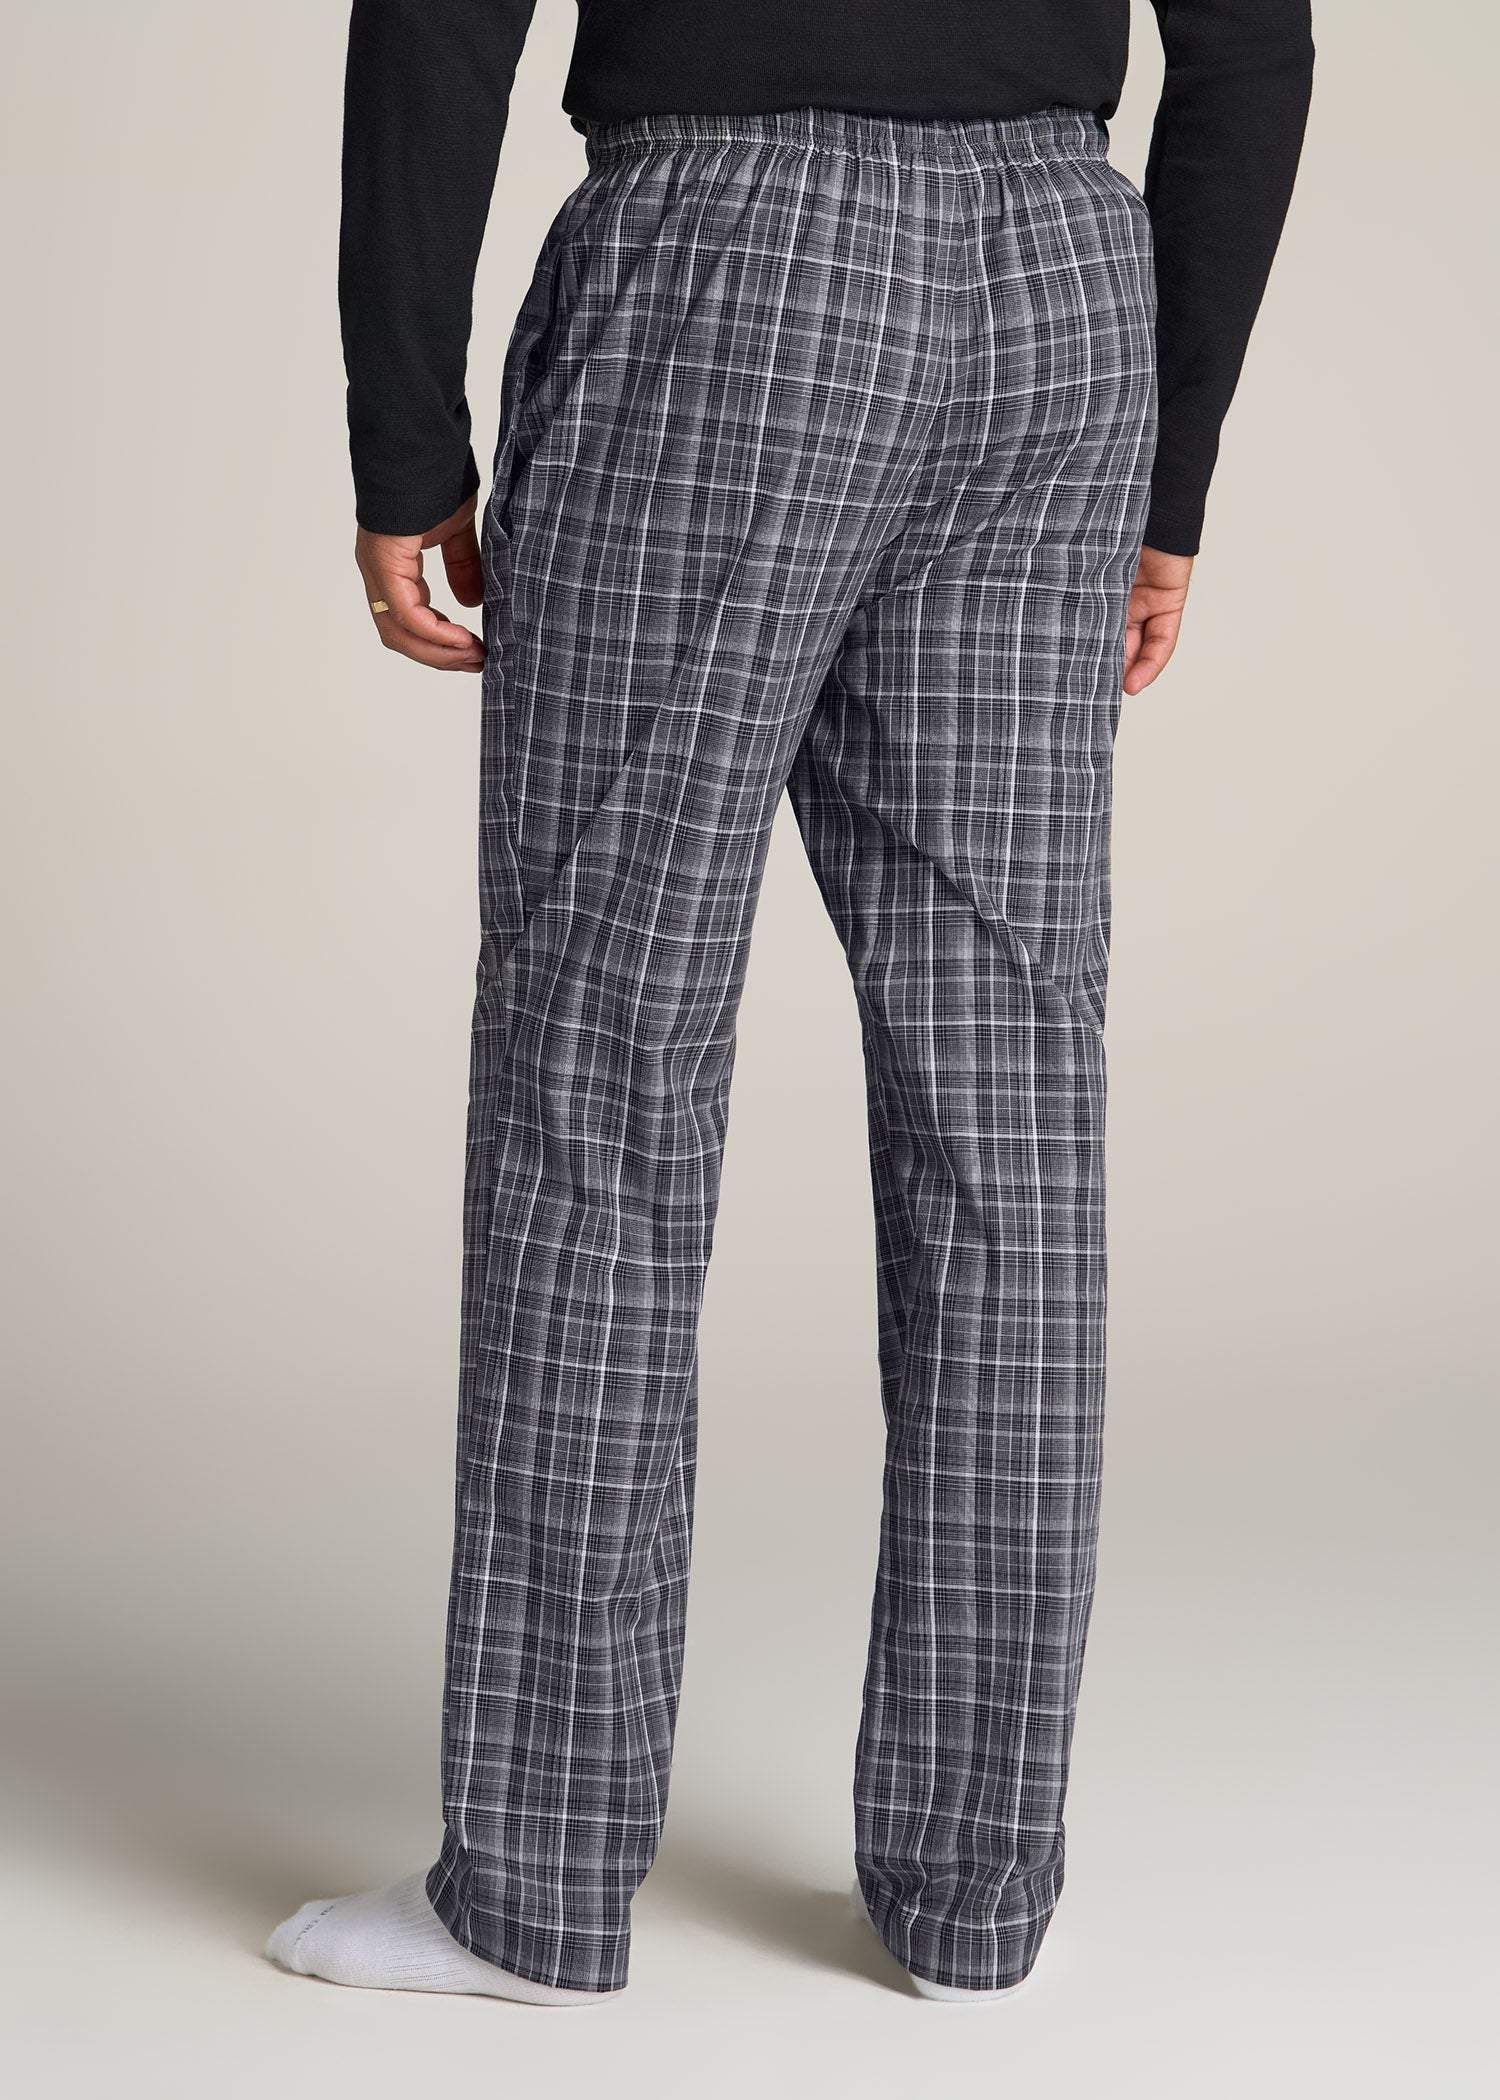 Woven Pajama Pants for Tall Men